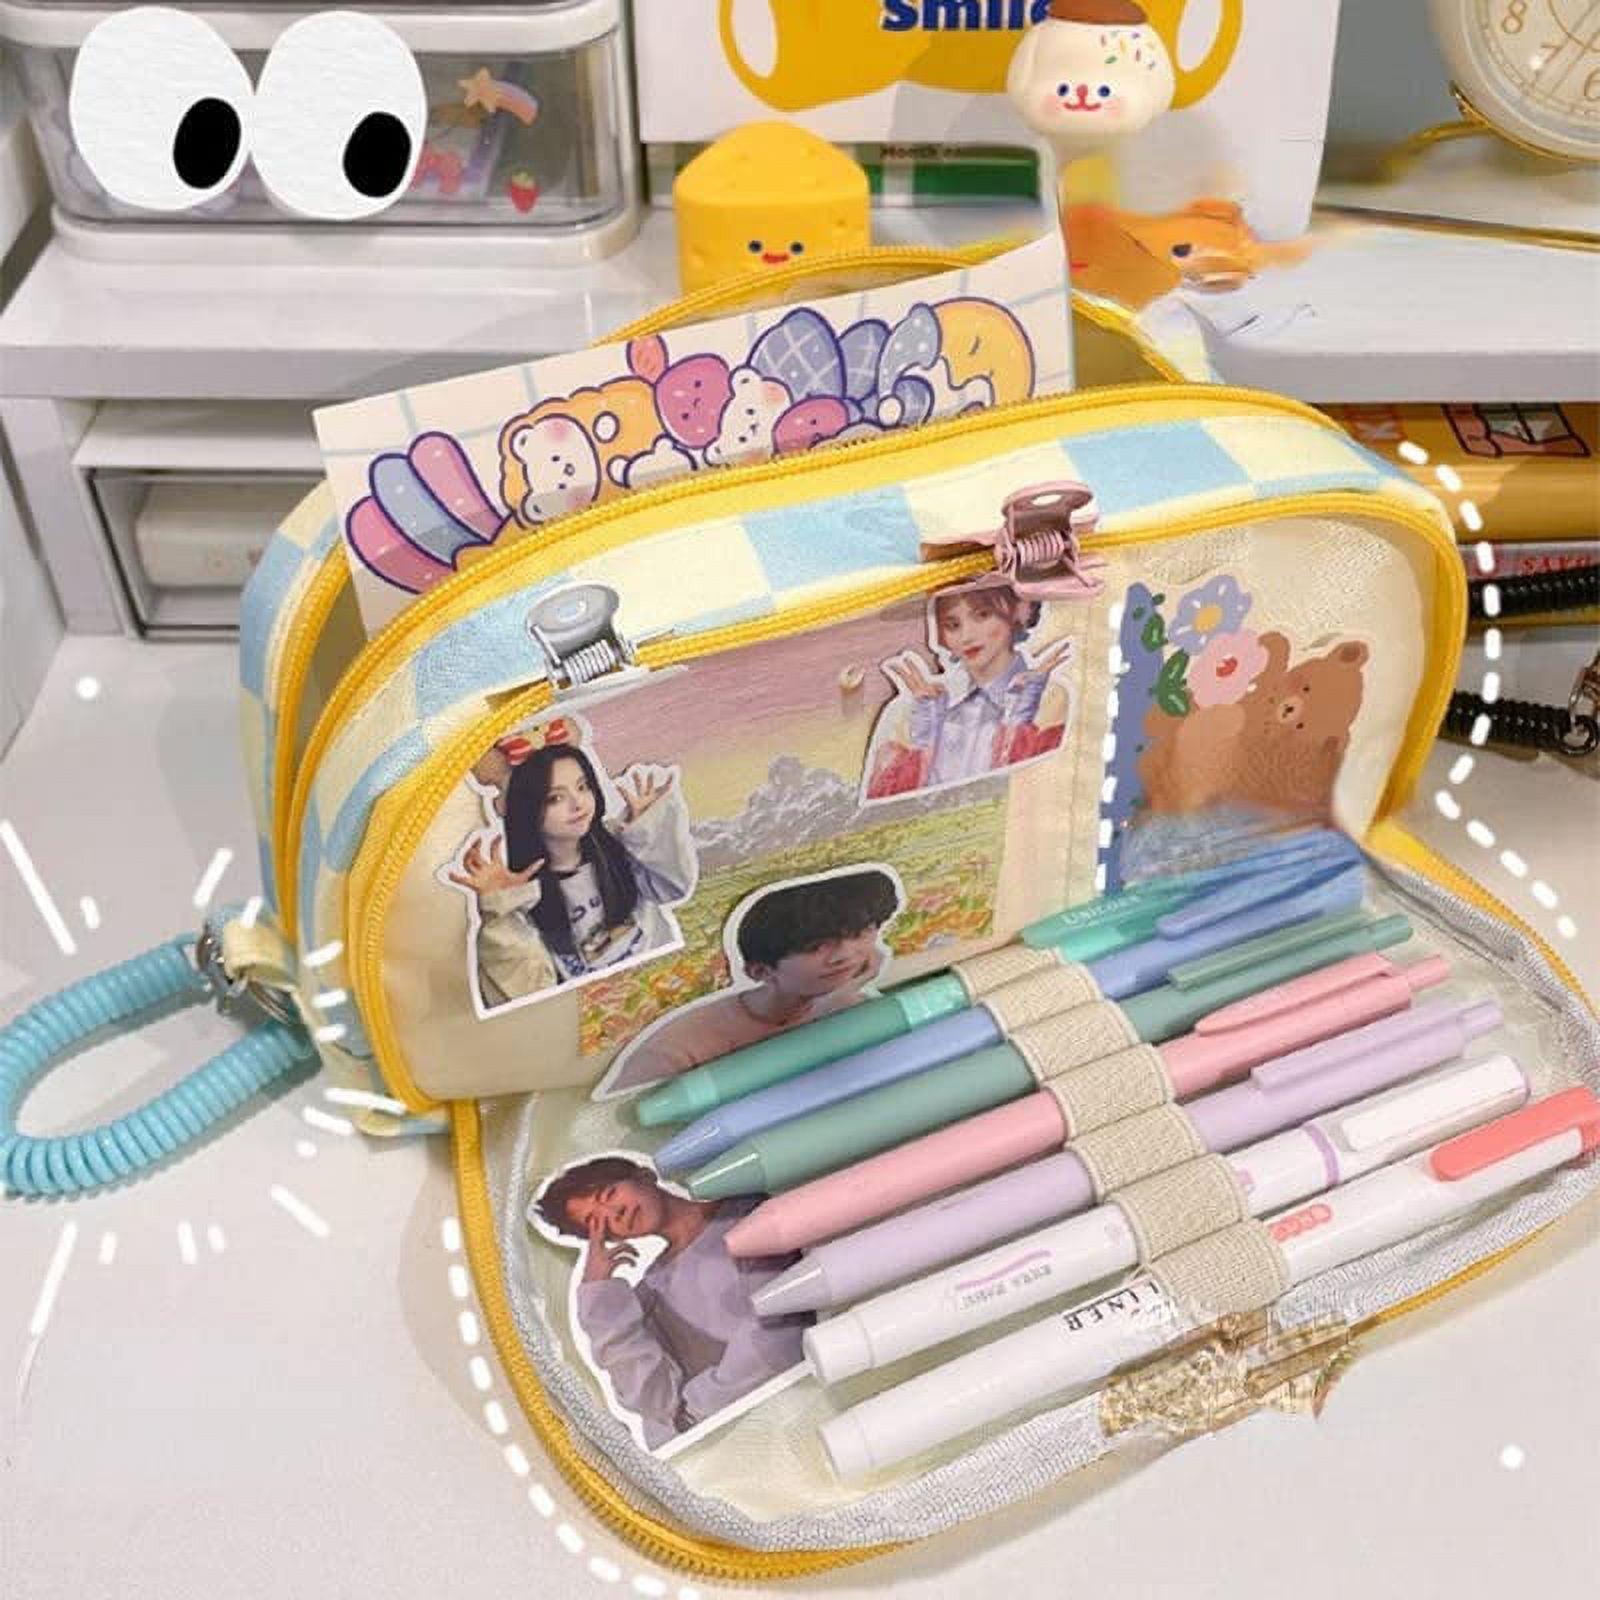 DanceeMangoo Pencil Bag Cute Strawberry Pattern Pencil Case Cartoon Pink  Pencil Bag with Bow School Stationery Supplies (White Strawberry) 